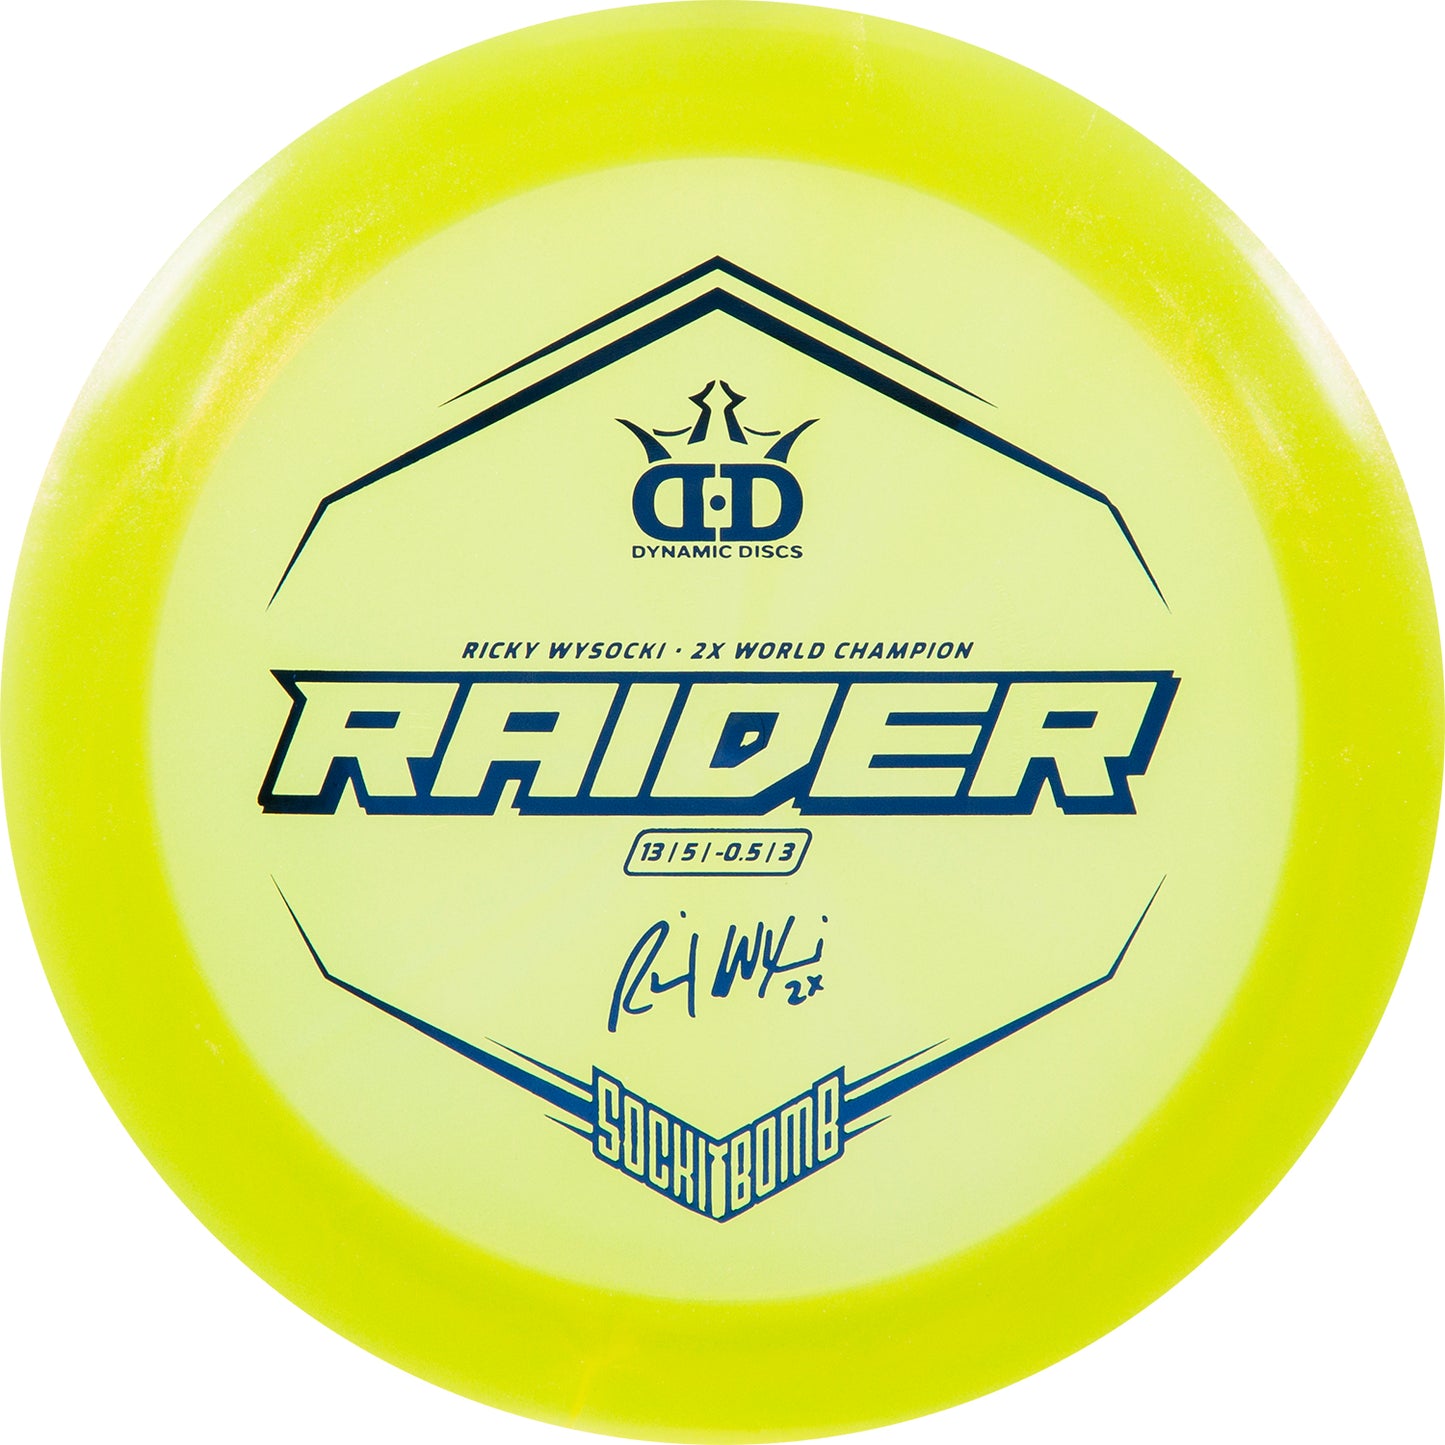 Dynamic Discs Lucid-Ice Glimmer Raider Ricky Wysocki Sockibomb Stamp